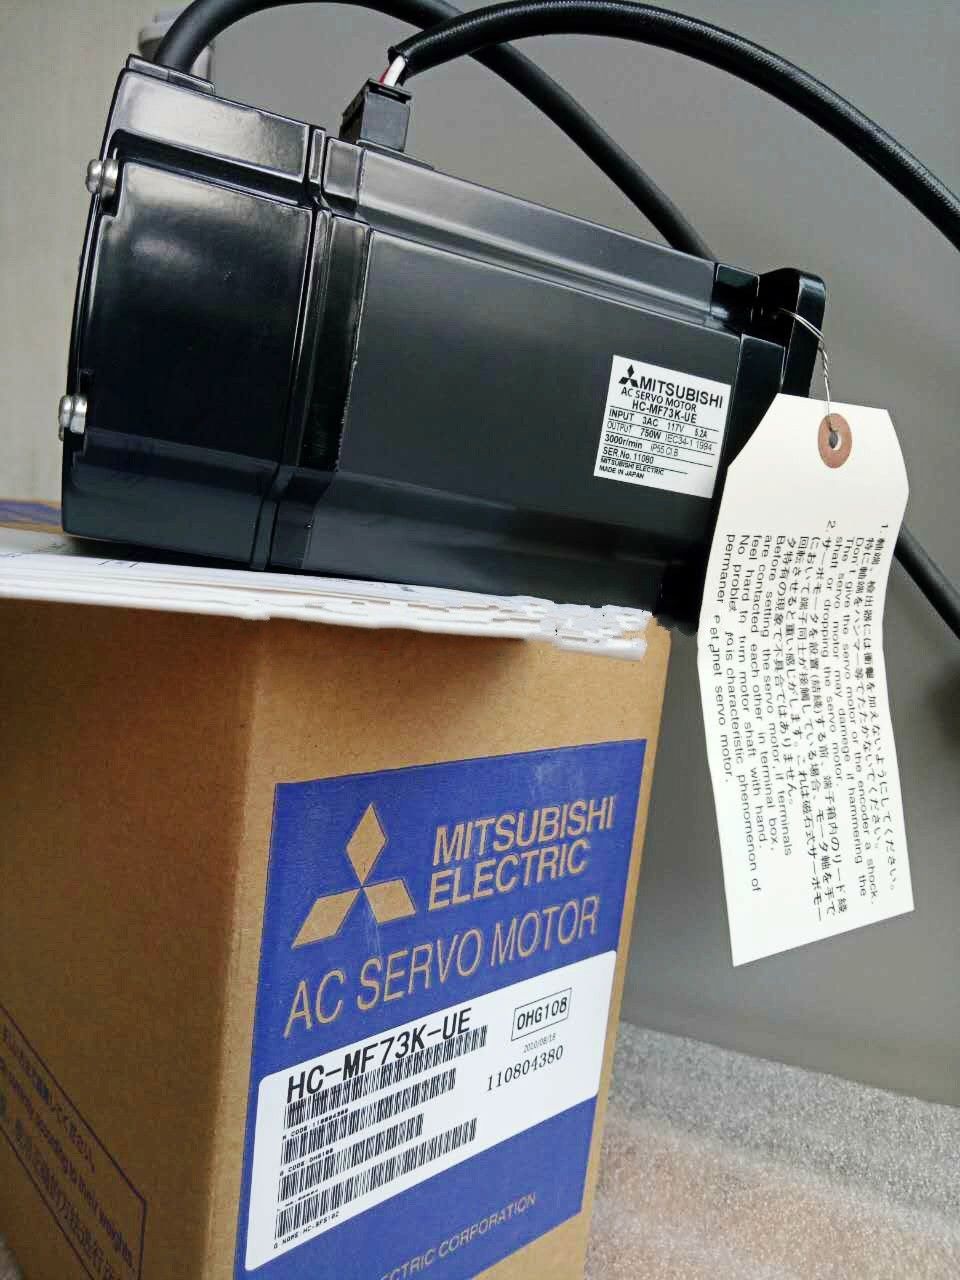 MITSUBISHI SERVO MOTOR HC-MF73K-UE NEW in box HCMF73KUE - Click Image to Close